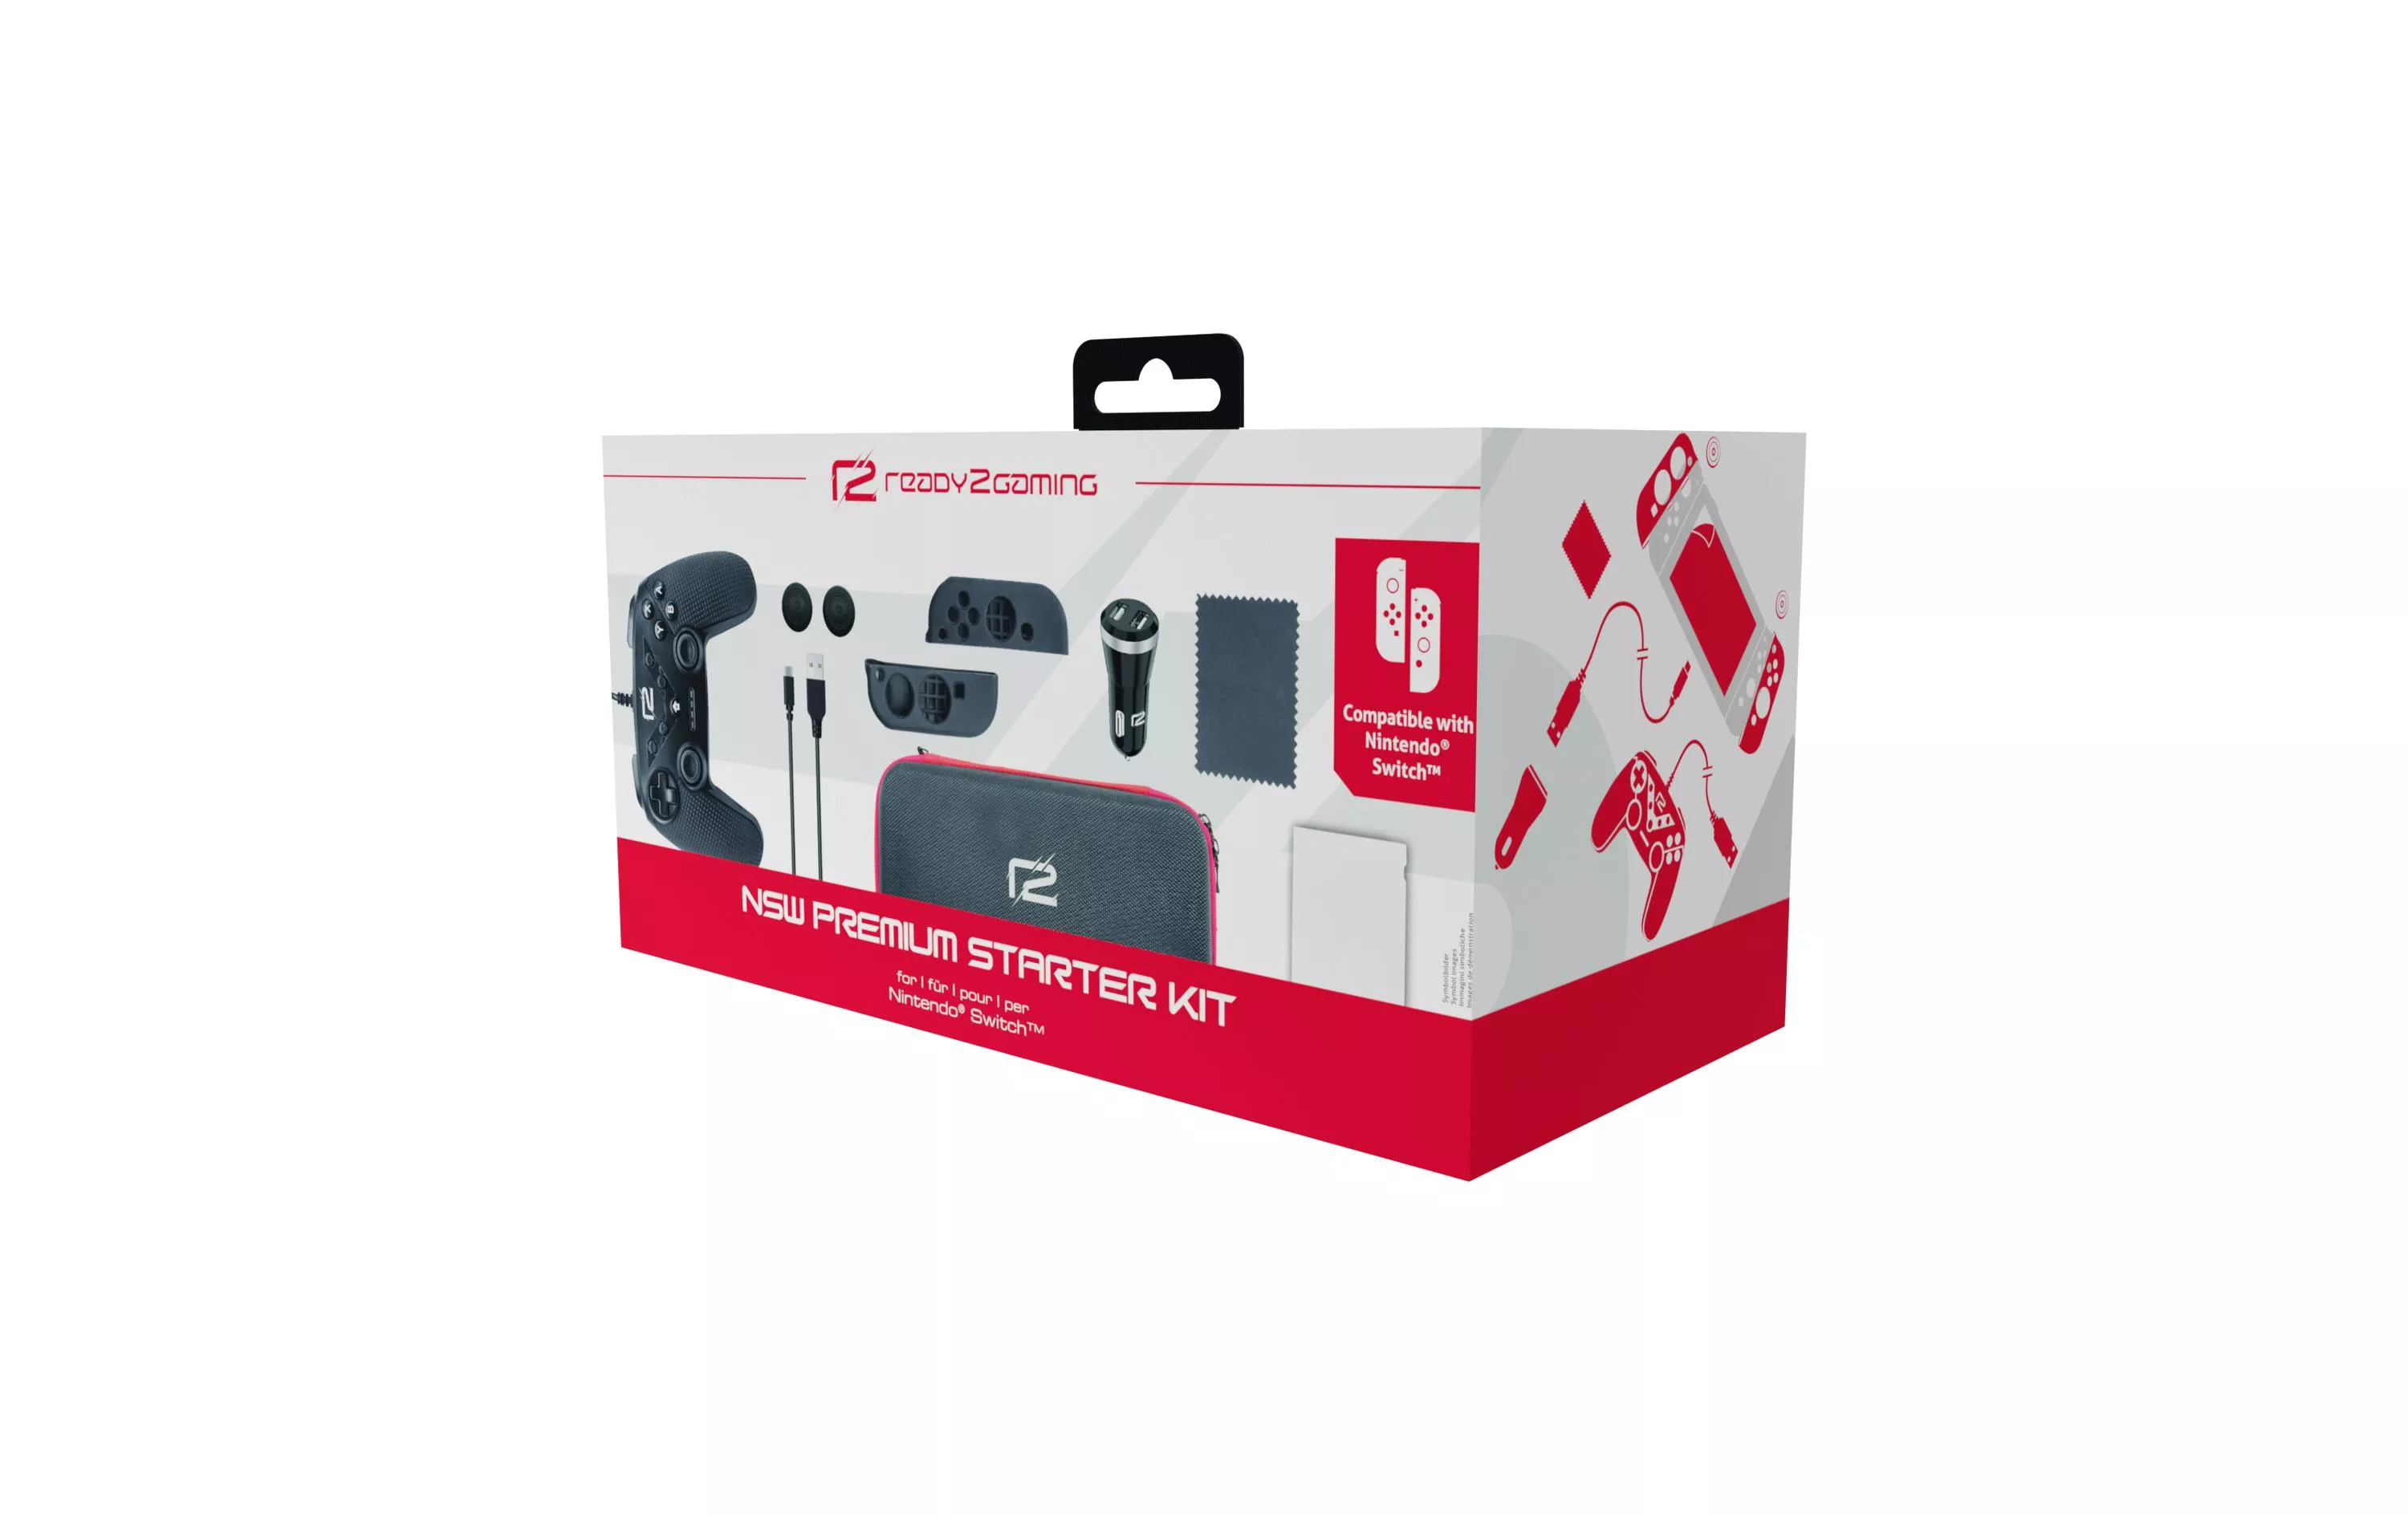 Nintendo Switch Premium Starter Kit